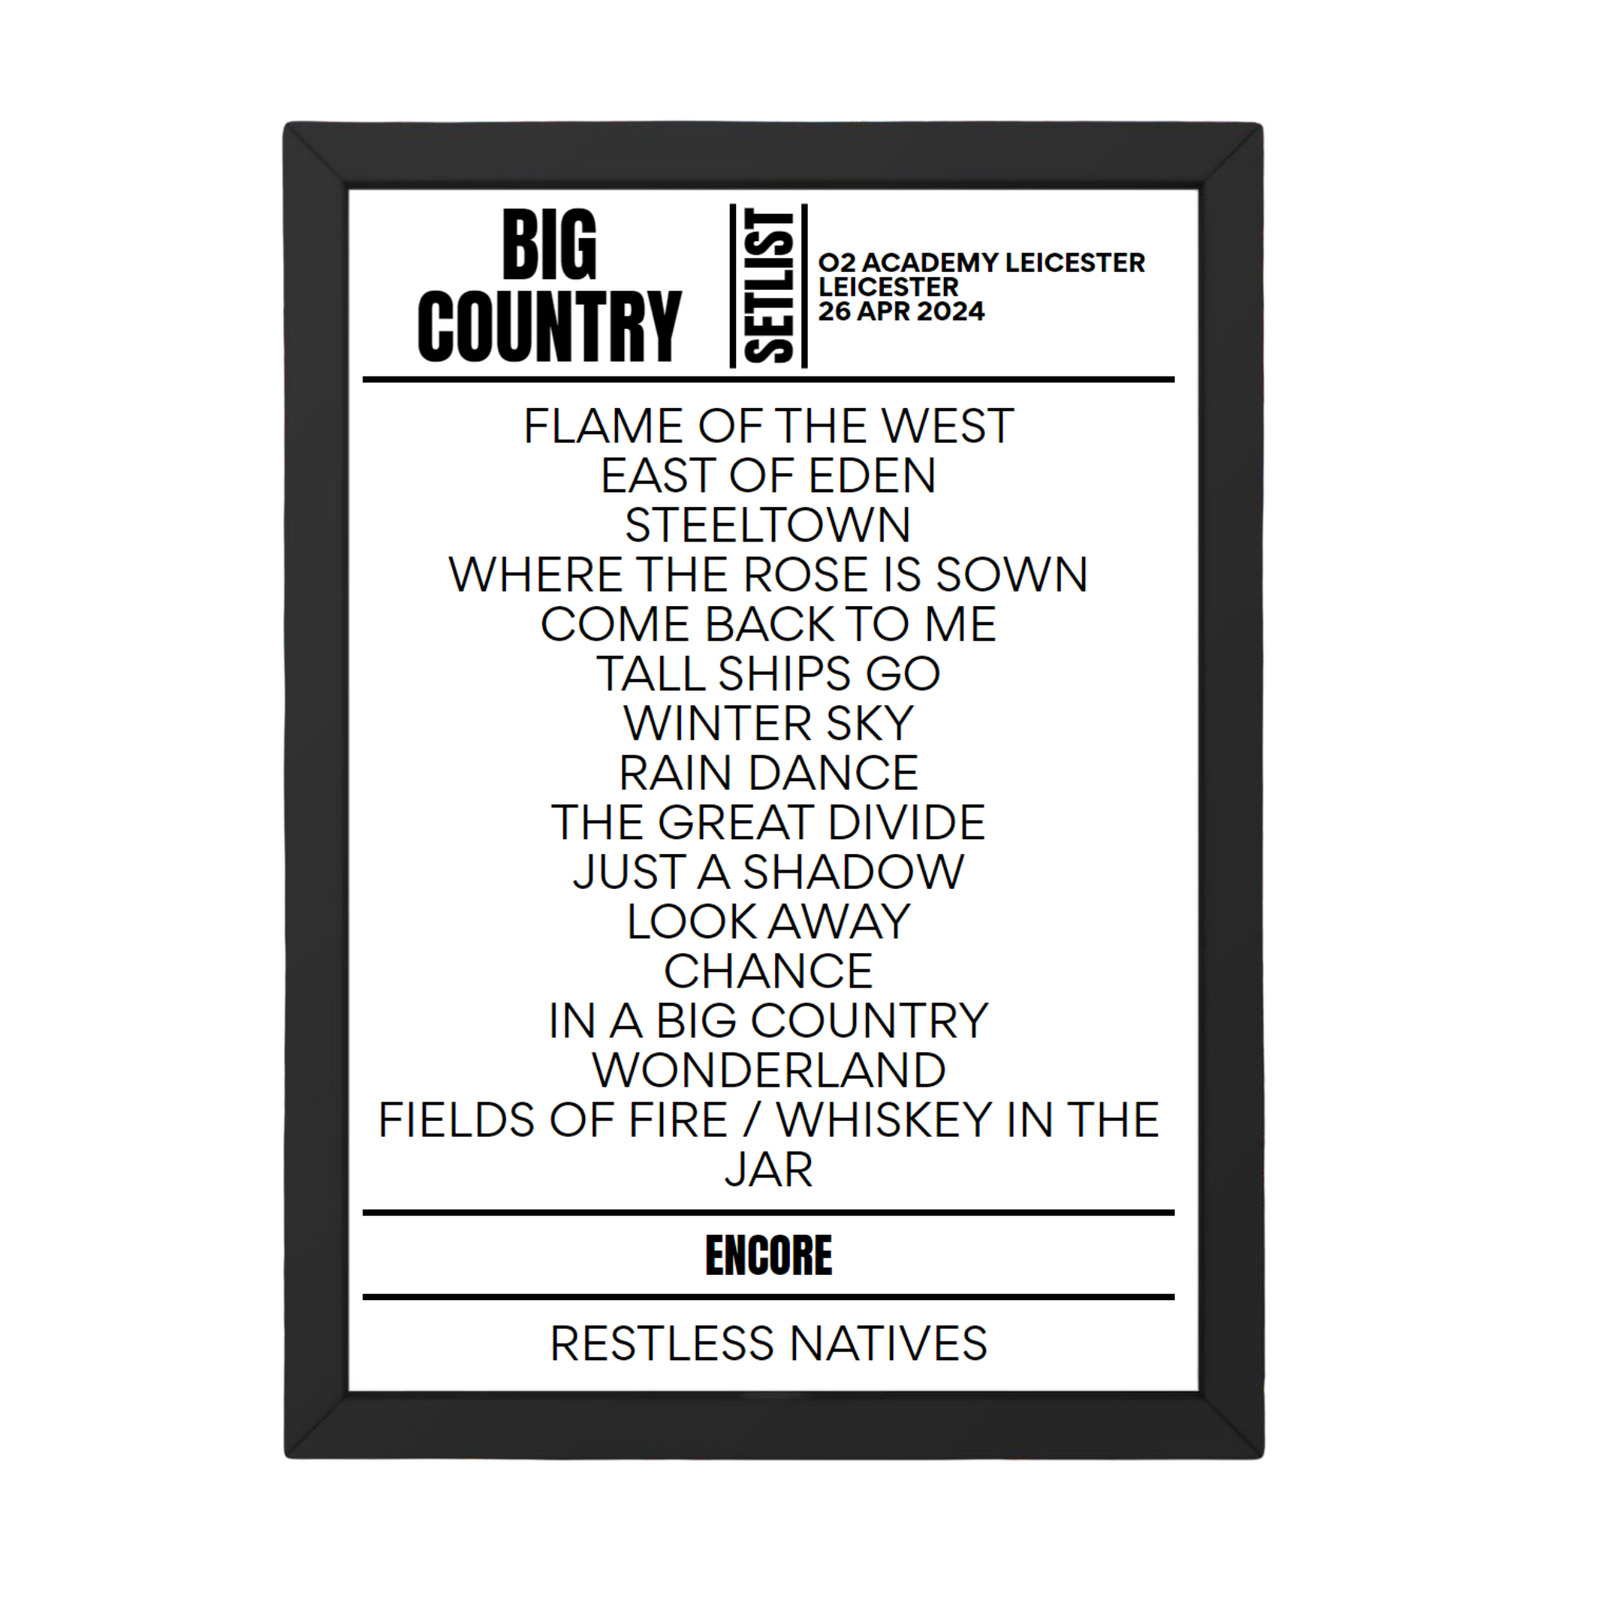 Big Country Leicester April 2024 Replica Setlist